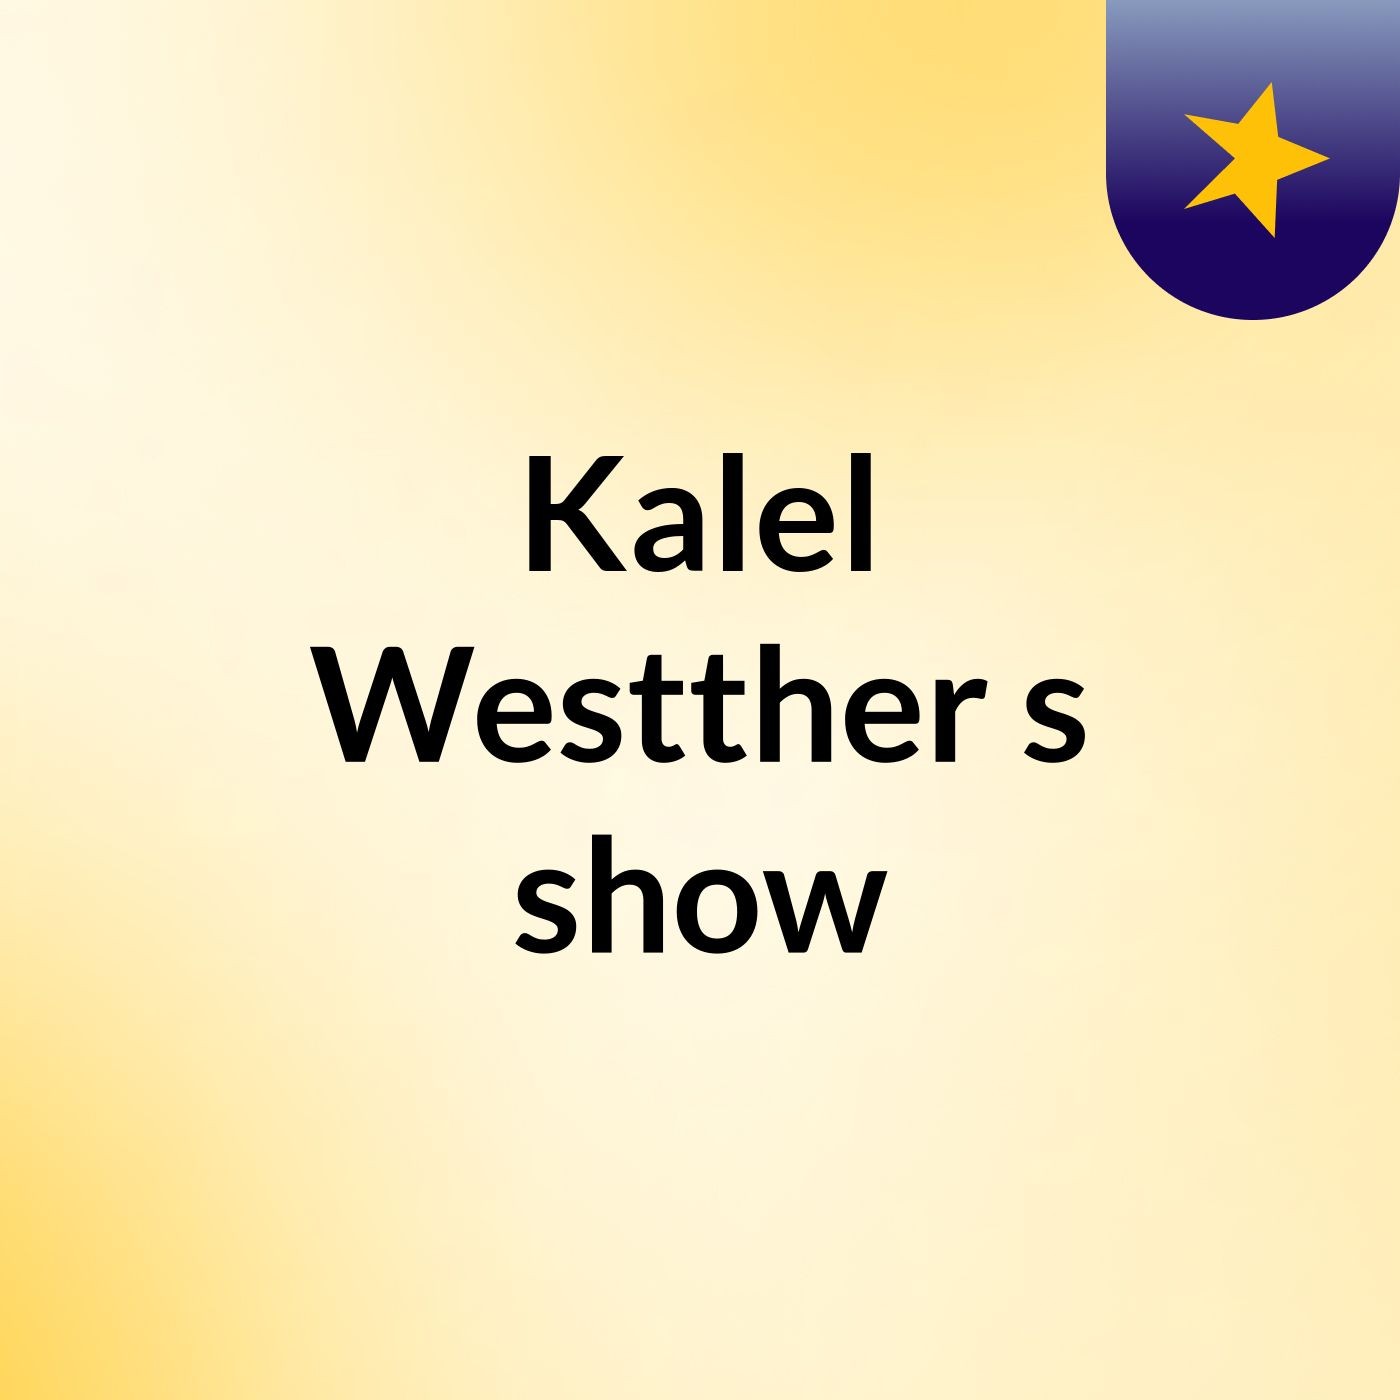 Kalel Westther's show